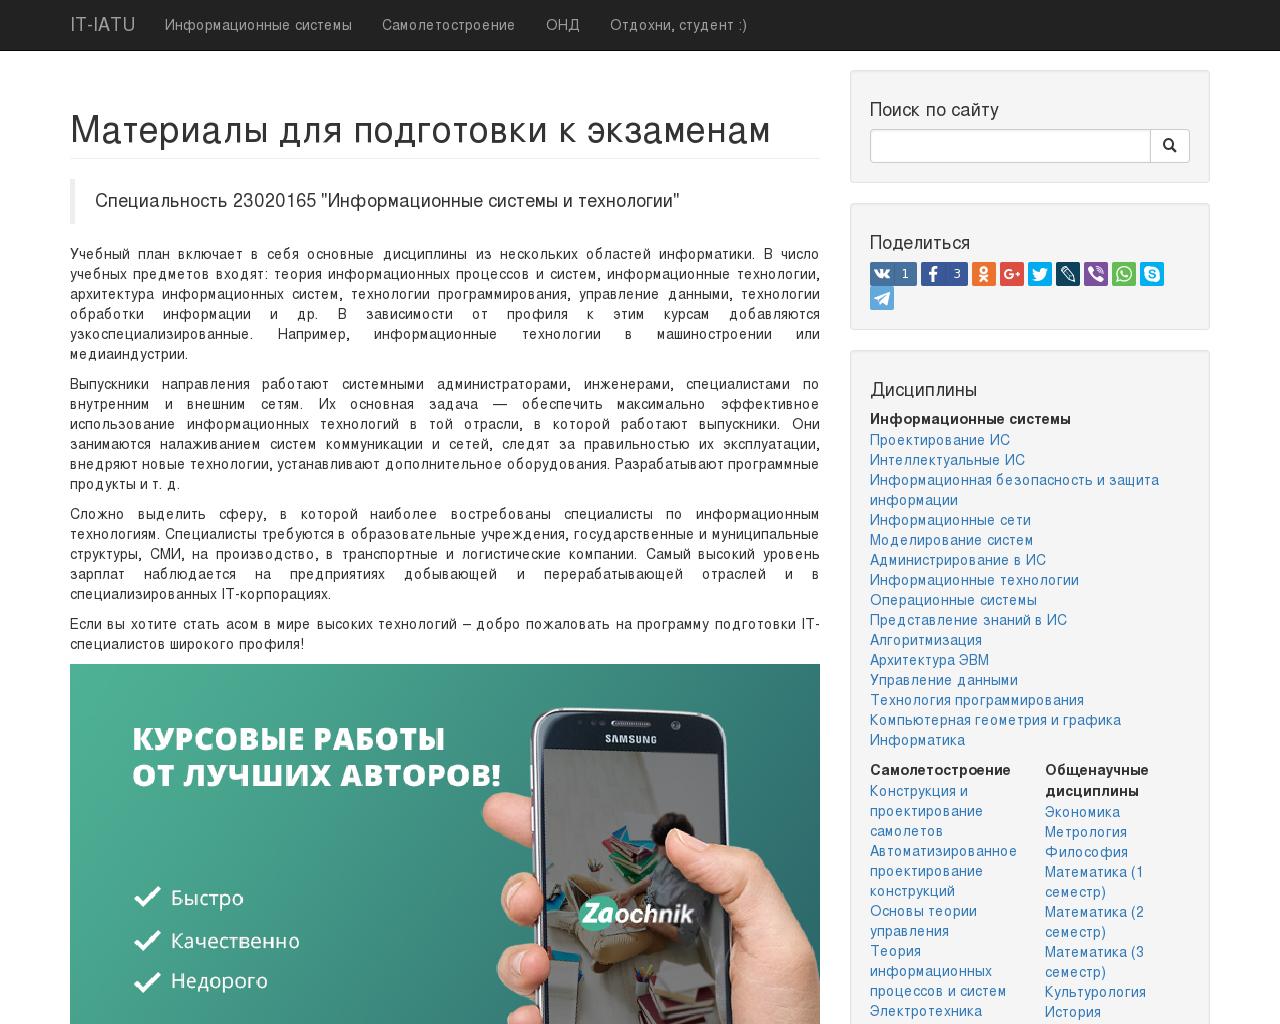 Изображение сайта it-iatu.ru в разрешении 1280x1024